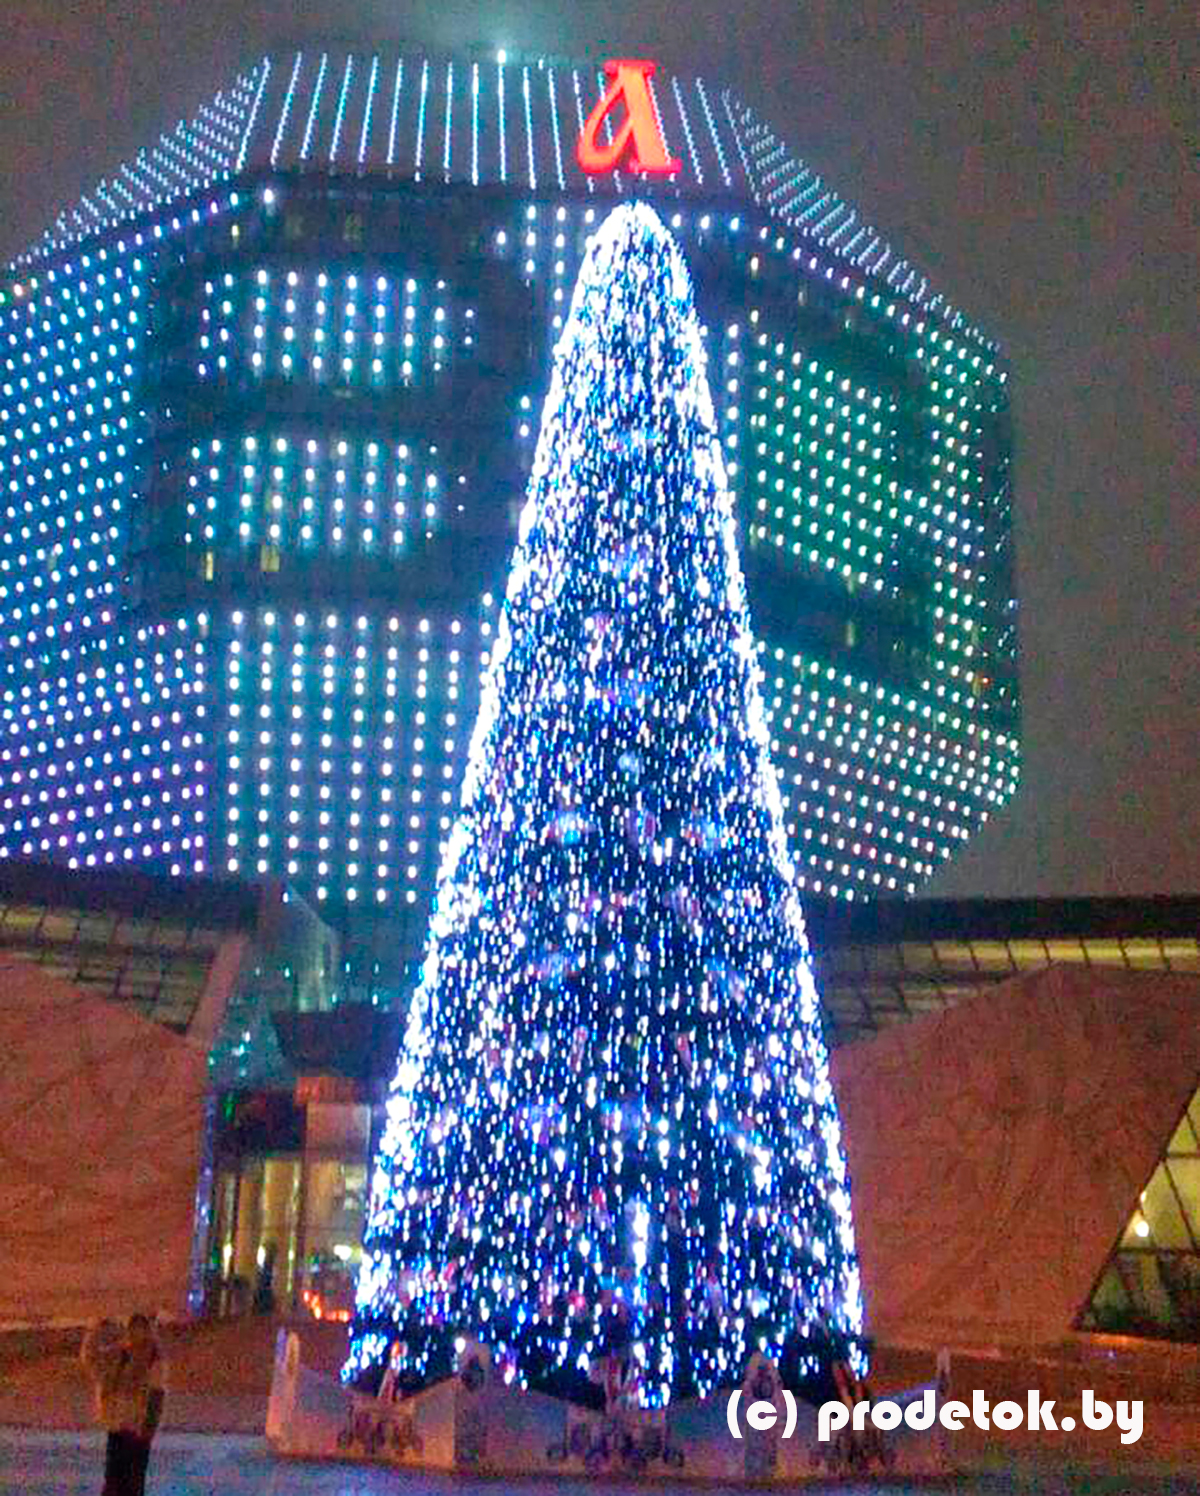 В Минске включили иллюминацию и зажгли новогодние елки: фотофакт